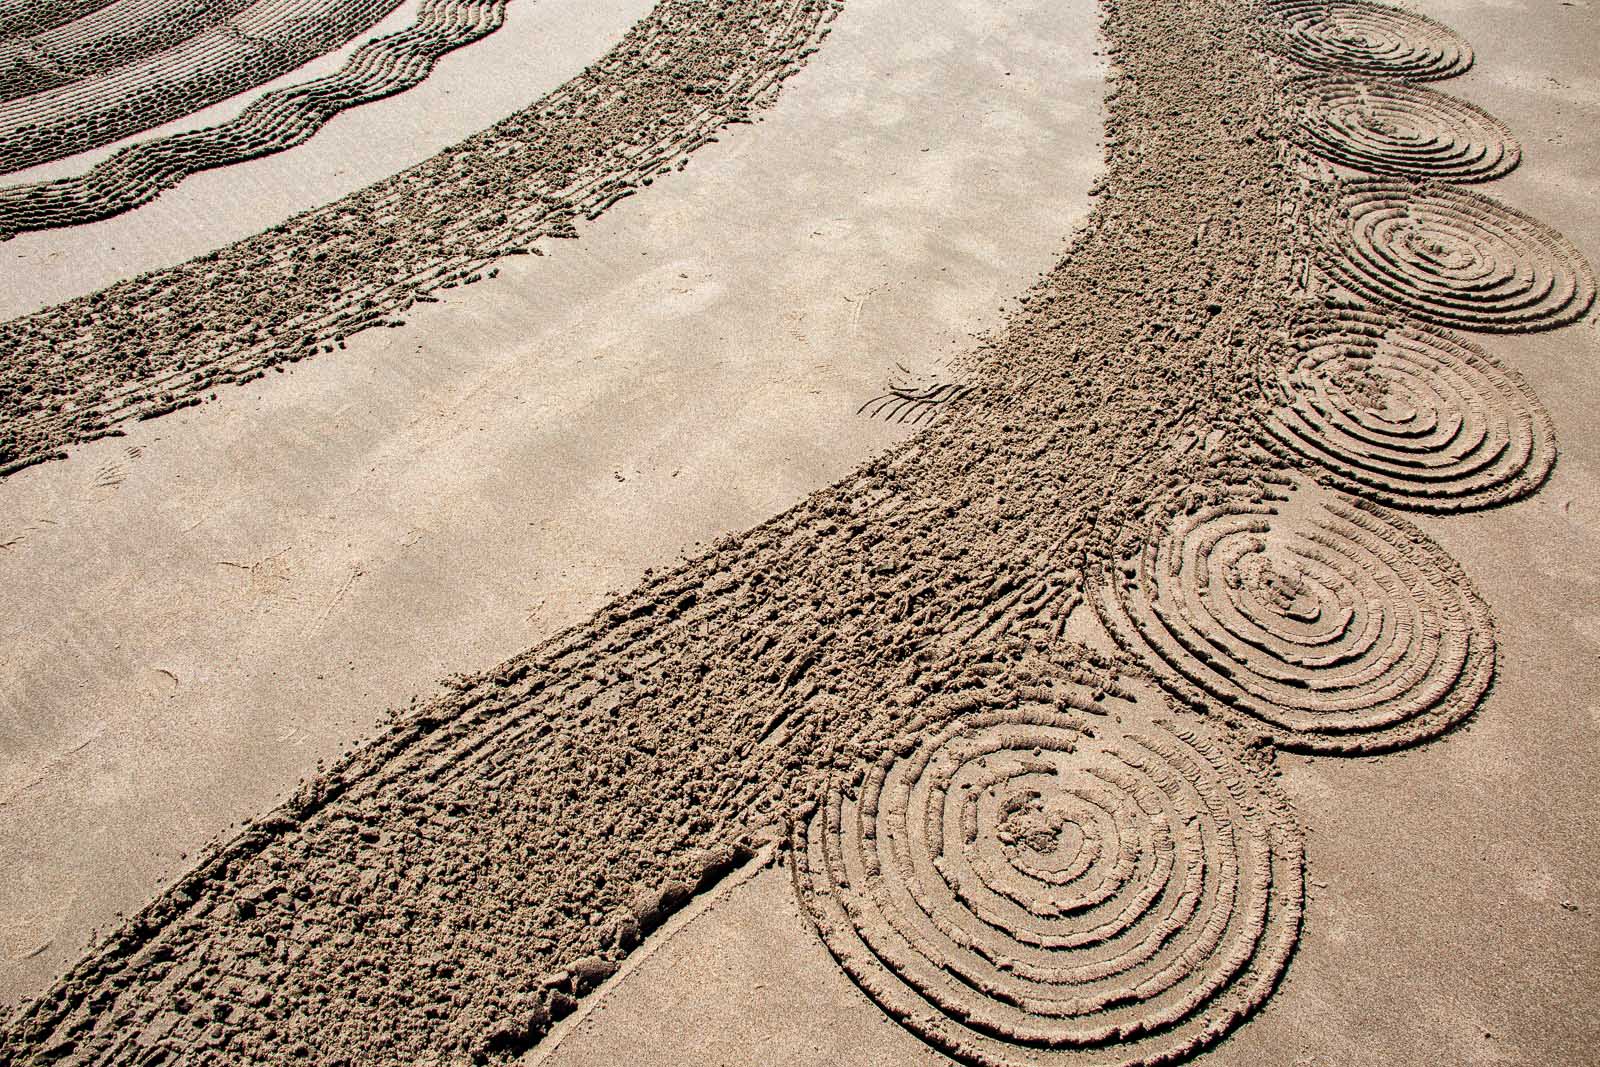 Circles-in-the-Sand-Bandon-Oregon-5.jpg